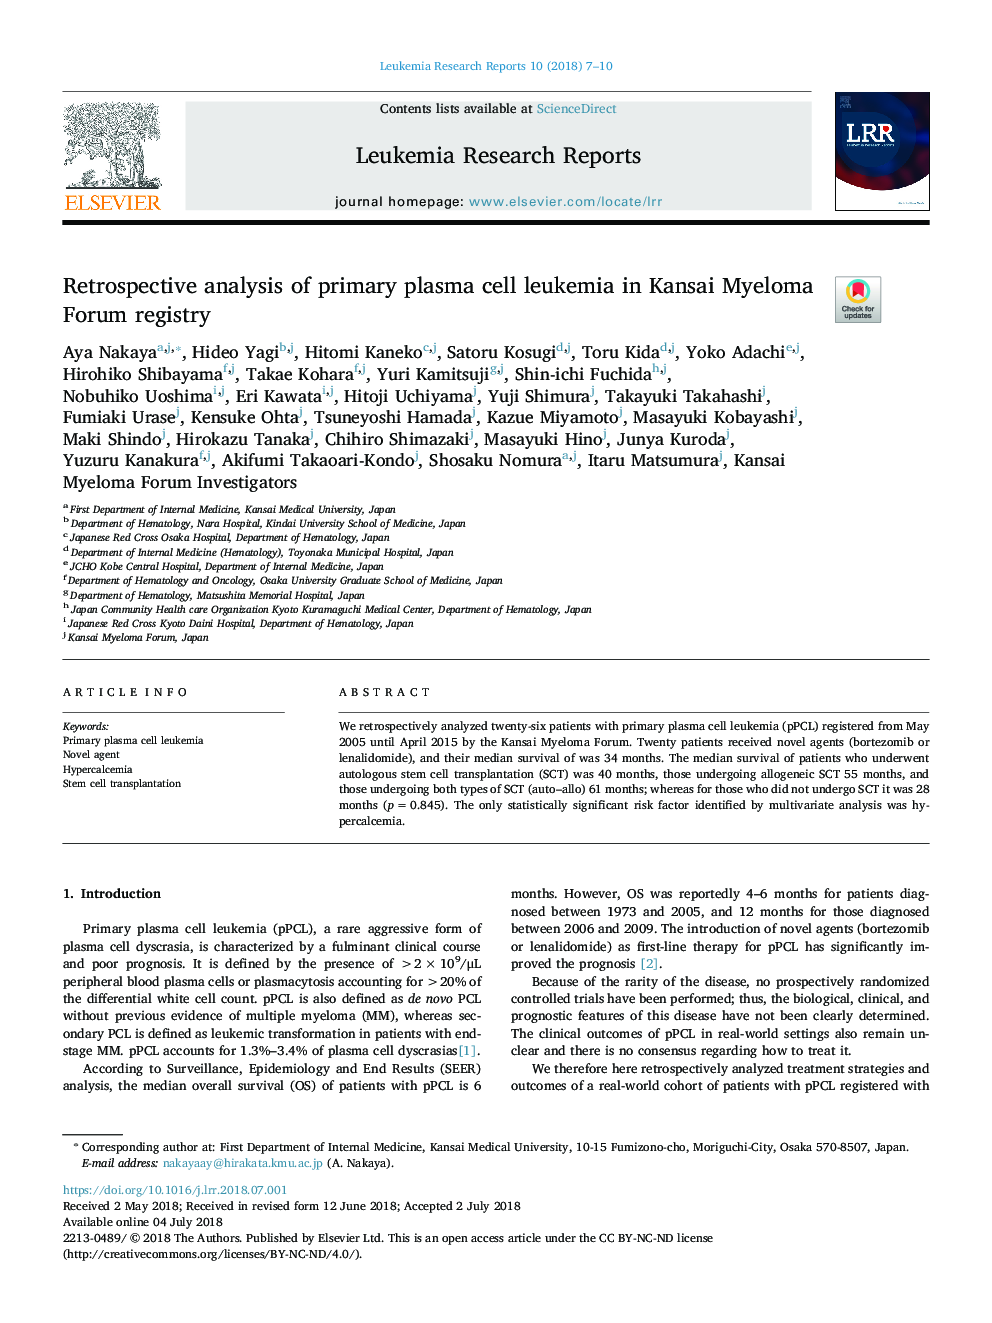 Retrospective analysis of primary plasma cell leukemia in Kansai Myeloma Forum registry